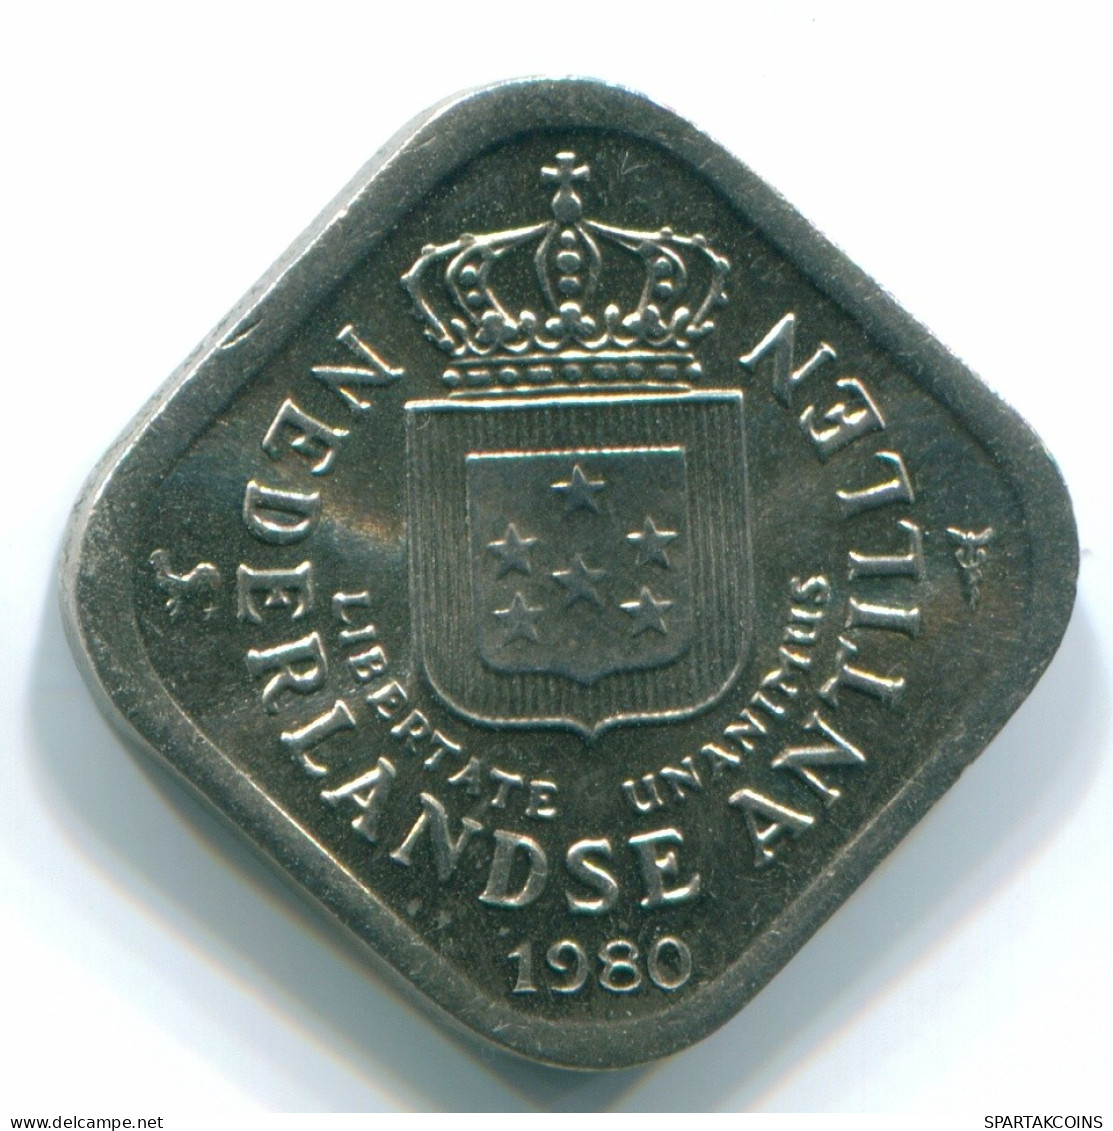 5 CENTS 1980 NETHERLANDS ANTILLES Nickel Colonial Coin #S12311.U.A - Antilles Néerlandaises